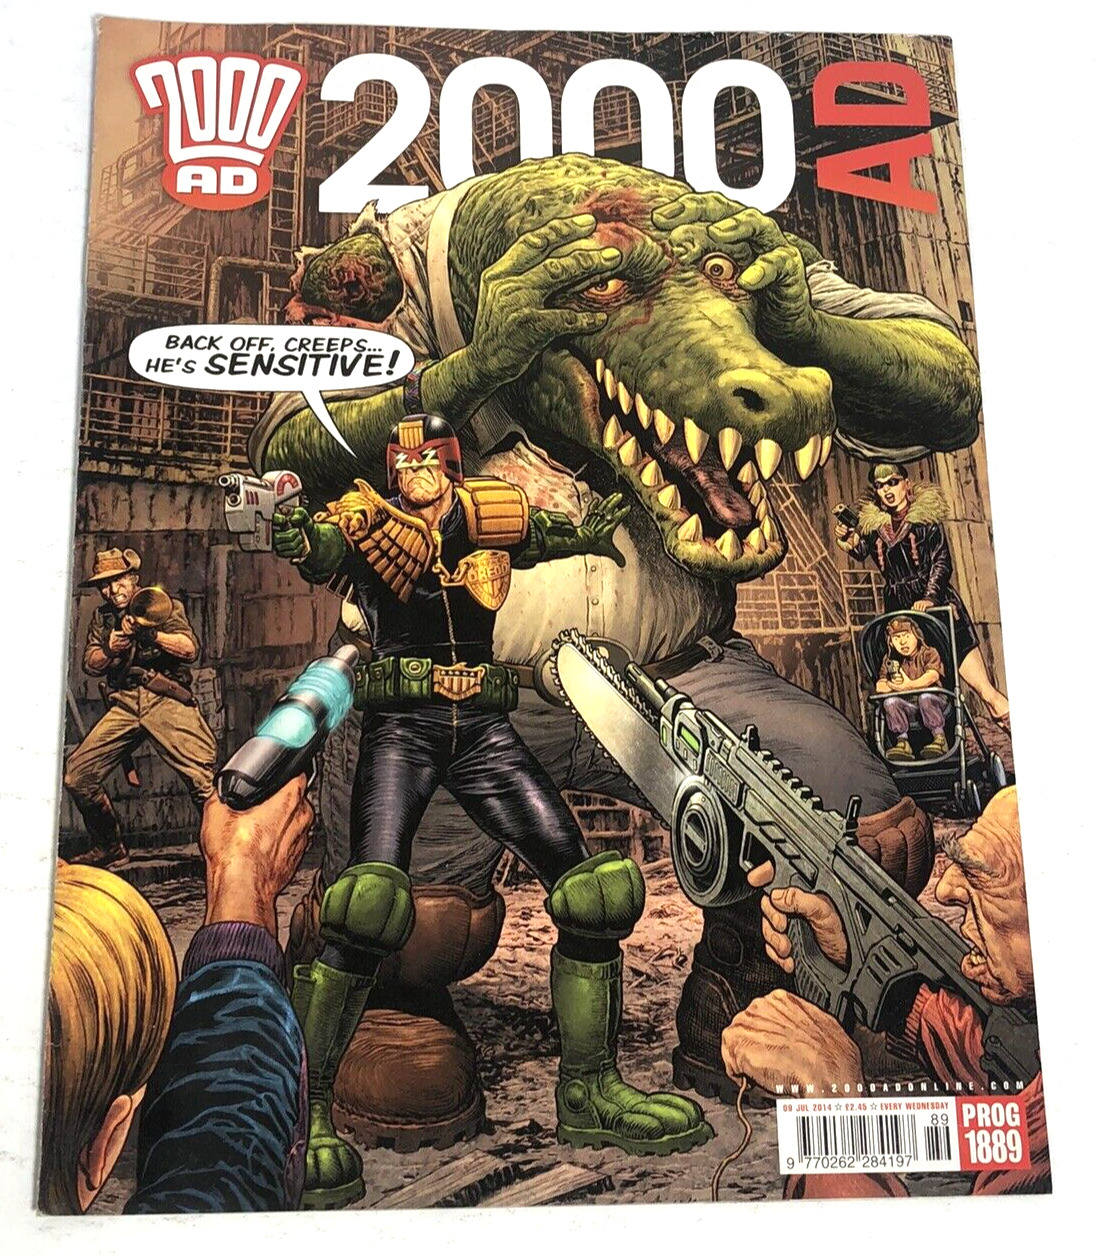 2000 AD Prog 1889 JULY 2014 Rebellion Comics UK Colored Comic Book Judge Dredd